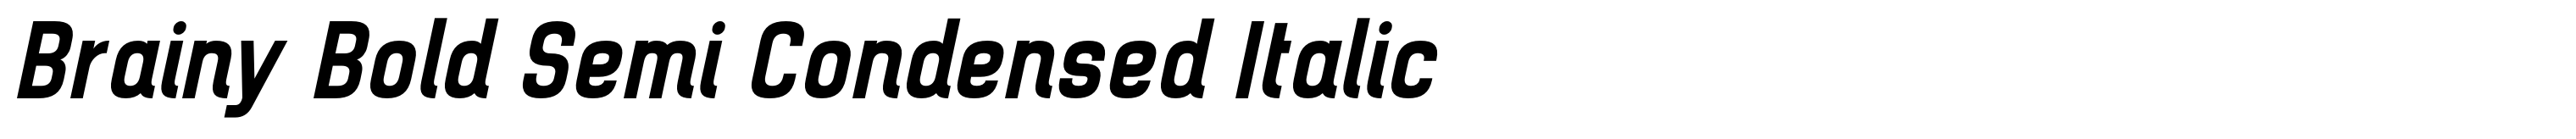 Brainy Bold Semi Condensed Italic